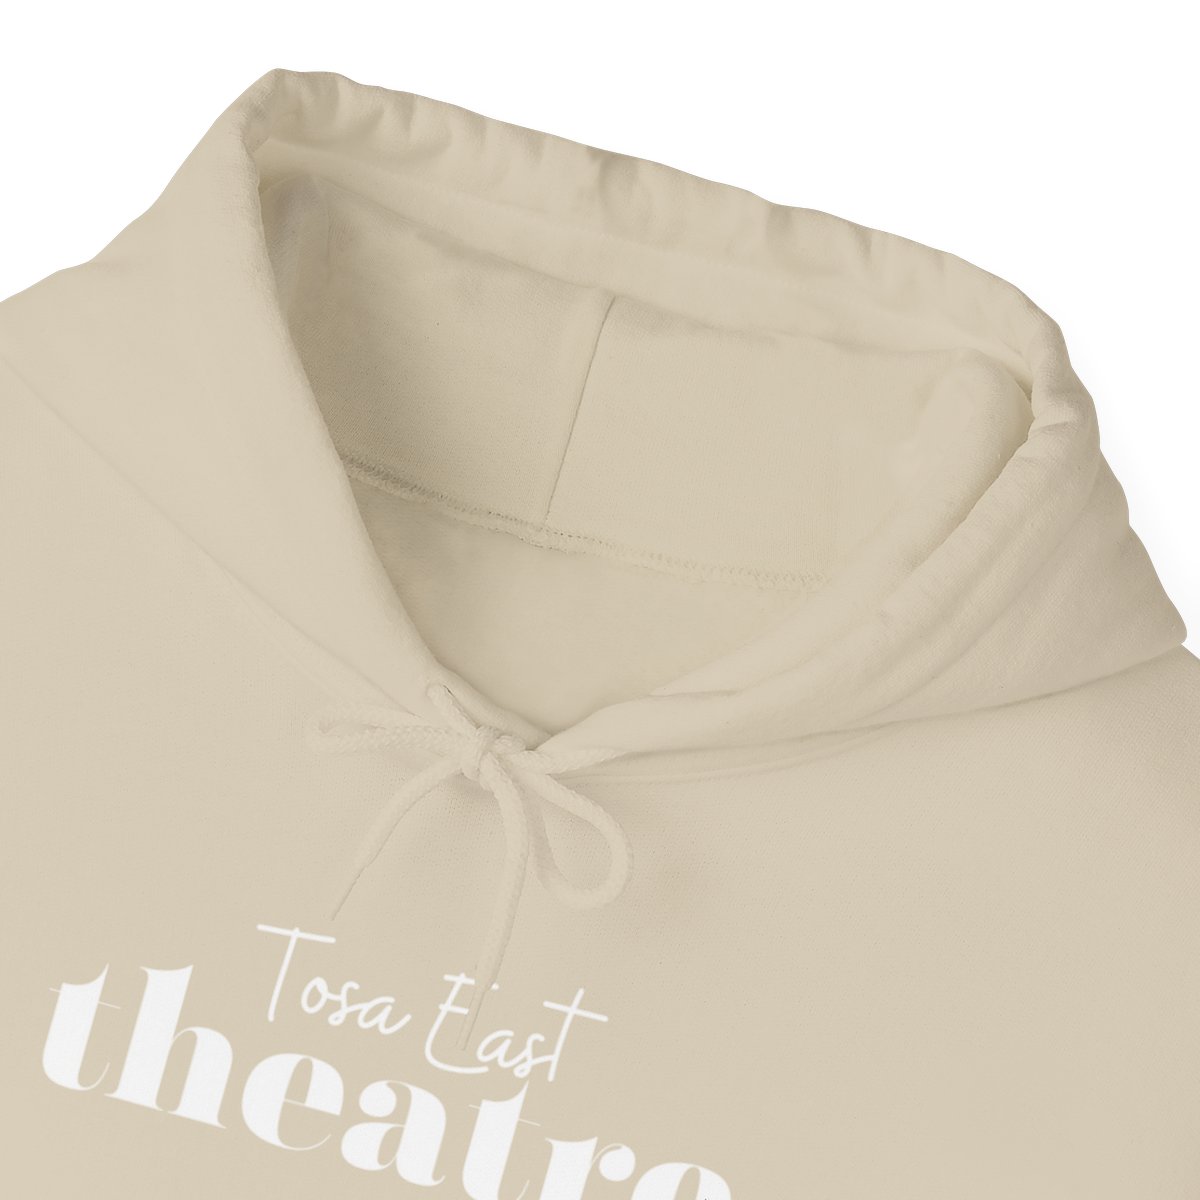 Copy of Unisex Hooded Sweatshirt White Logo 11 colors product thumbnail image